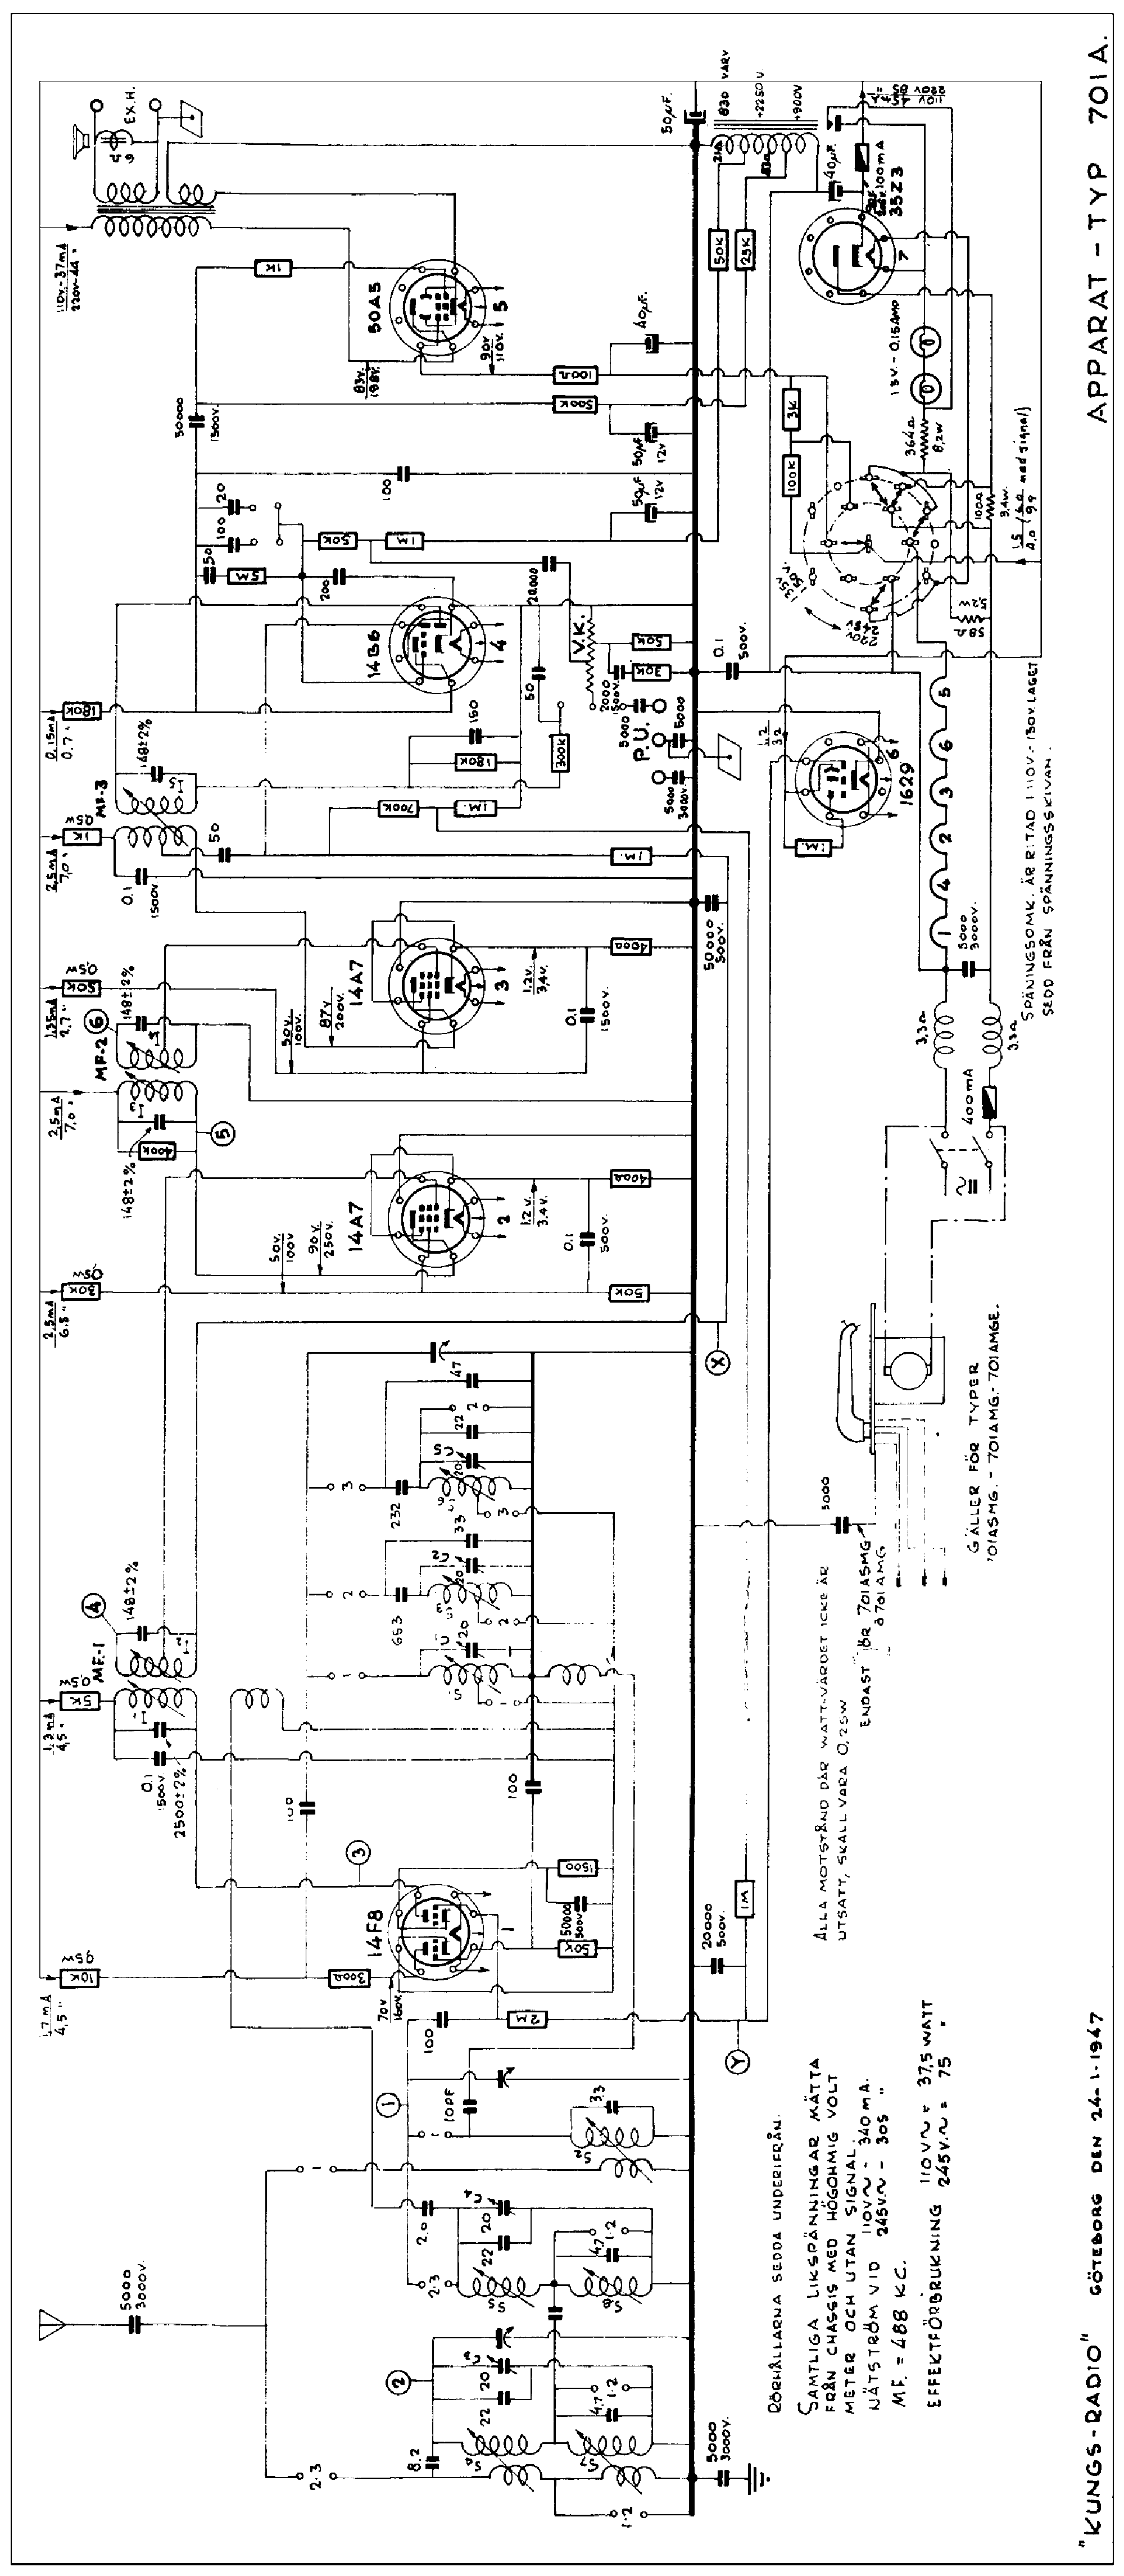 kungs-701a-radio-gramo-1947-sch-service-manual-download-schematics